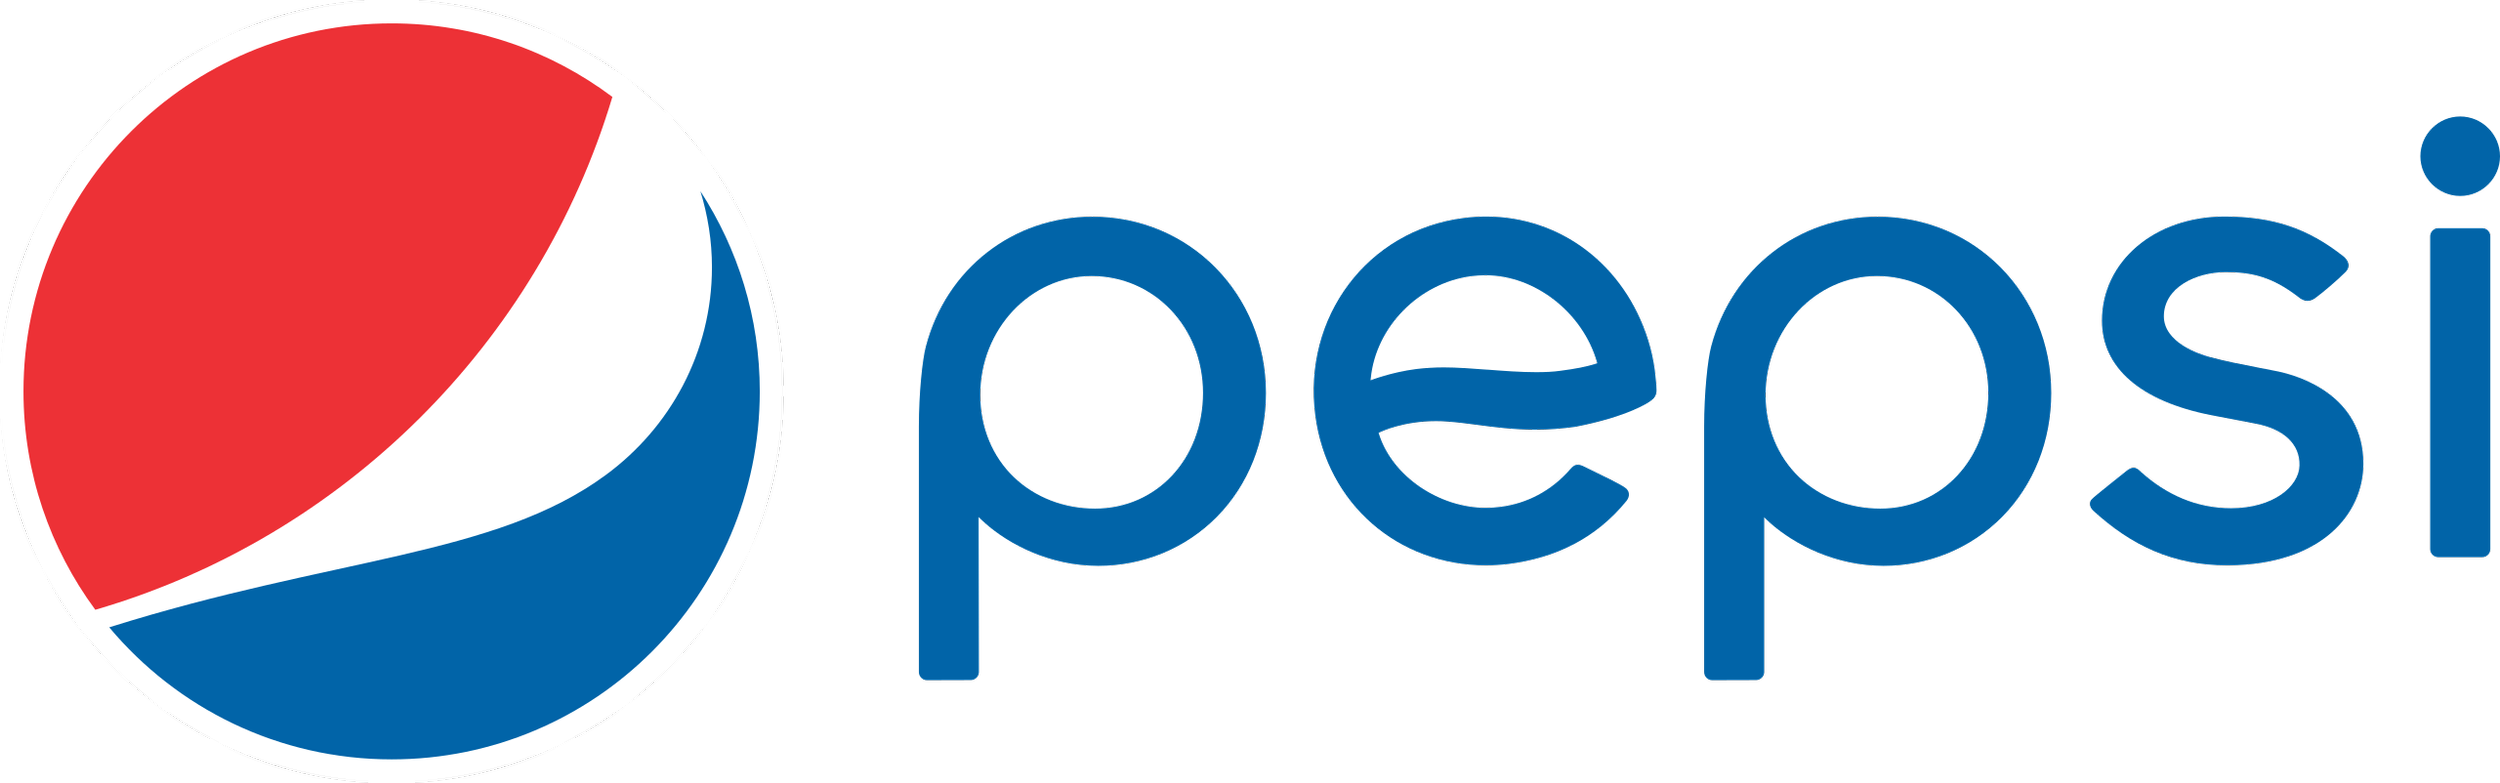 Pepsi_logo_(2014).svg.png